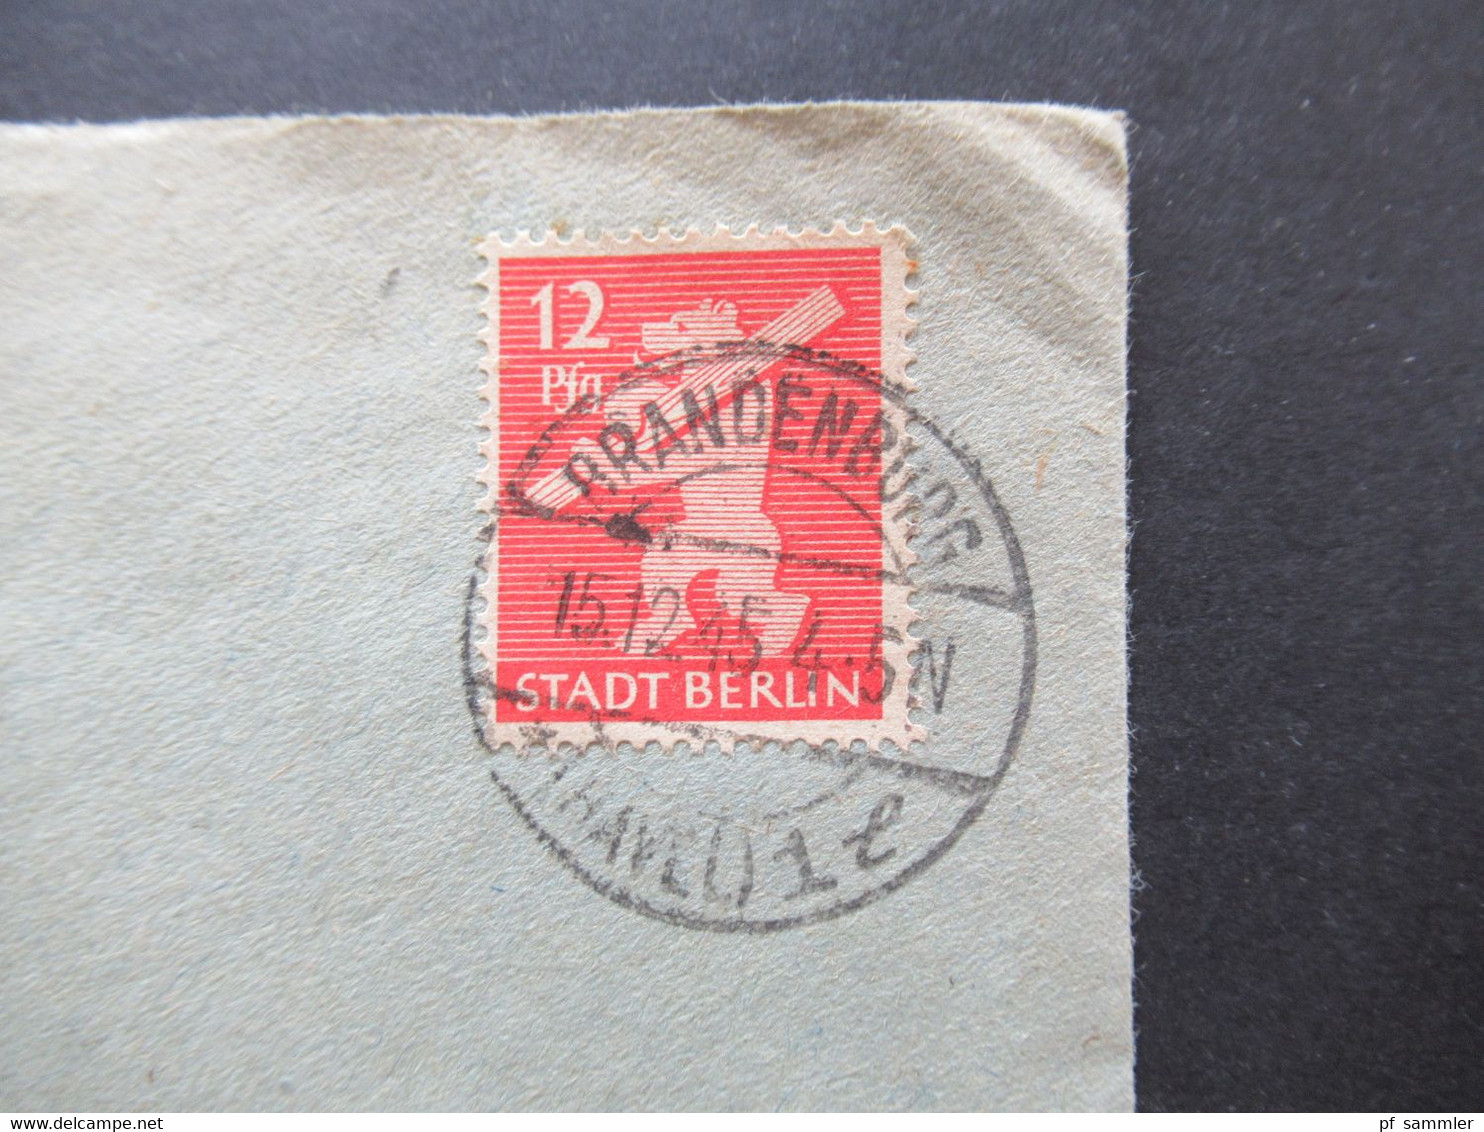 Berlin 15.12.1945 Nr. 5 EF Fernbrief Tagesstempel Brandenburg (Havel) - Gera Firmenstp. Otto Block Samenhandlung - Berlin & Brandenburg